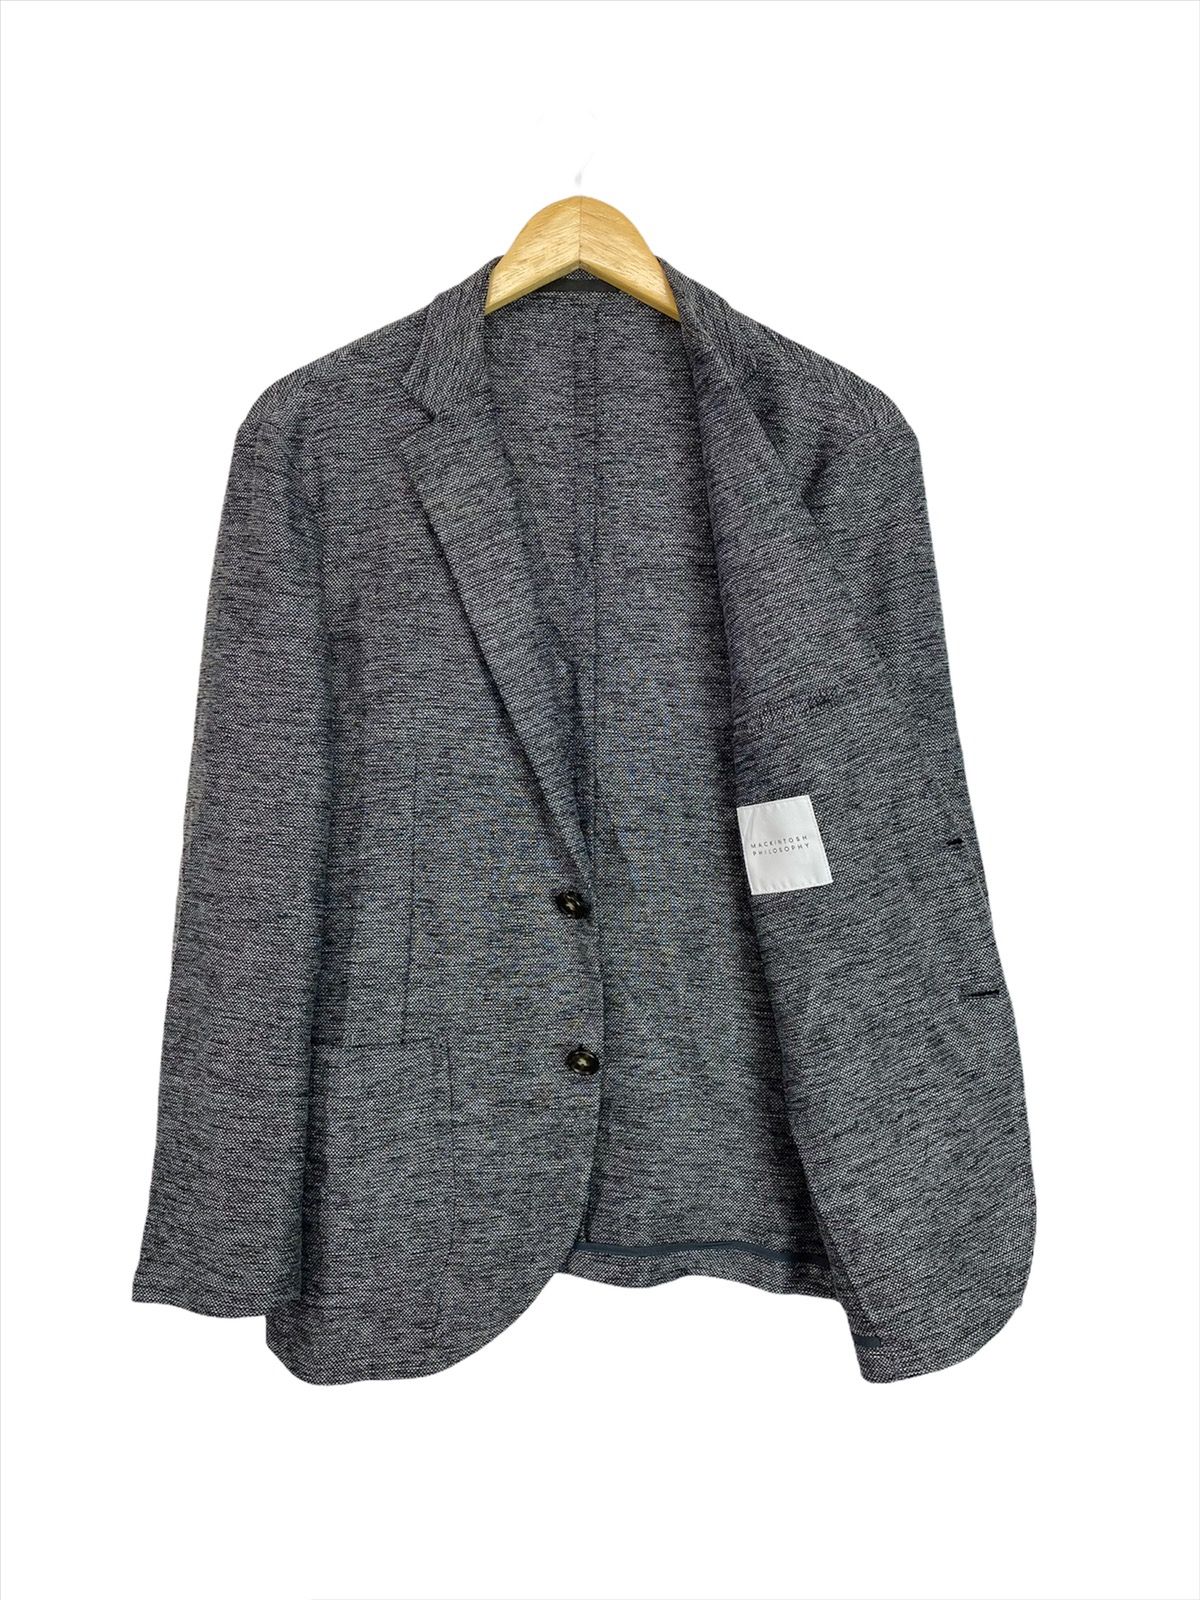 Rare Mackintosh Style Blazer Jacket - 2